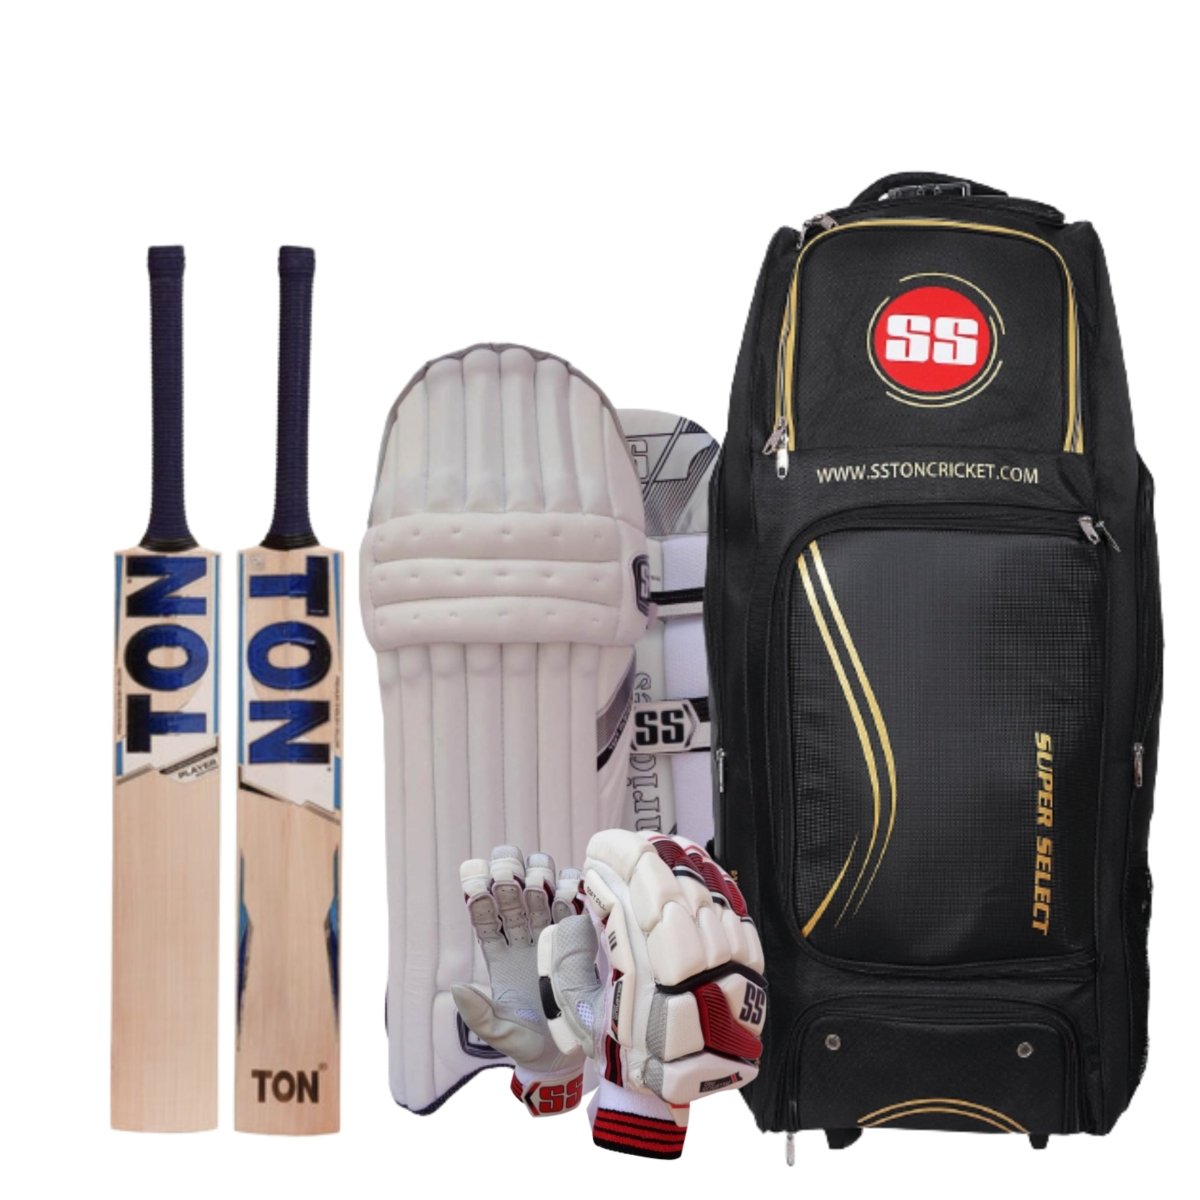 TON Player Edition English Willow Cricket Bat + SS Test Player Batting Pads + SS Millenium Pro Batting Gloves + SS Super Select Duffle - Acrux Sports